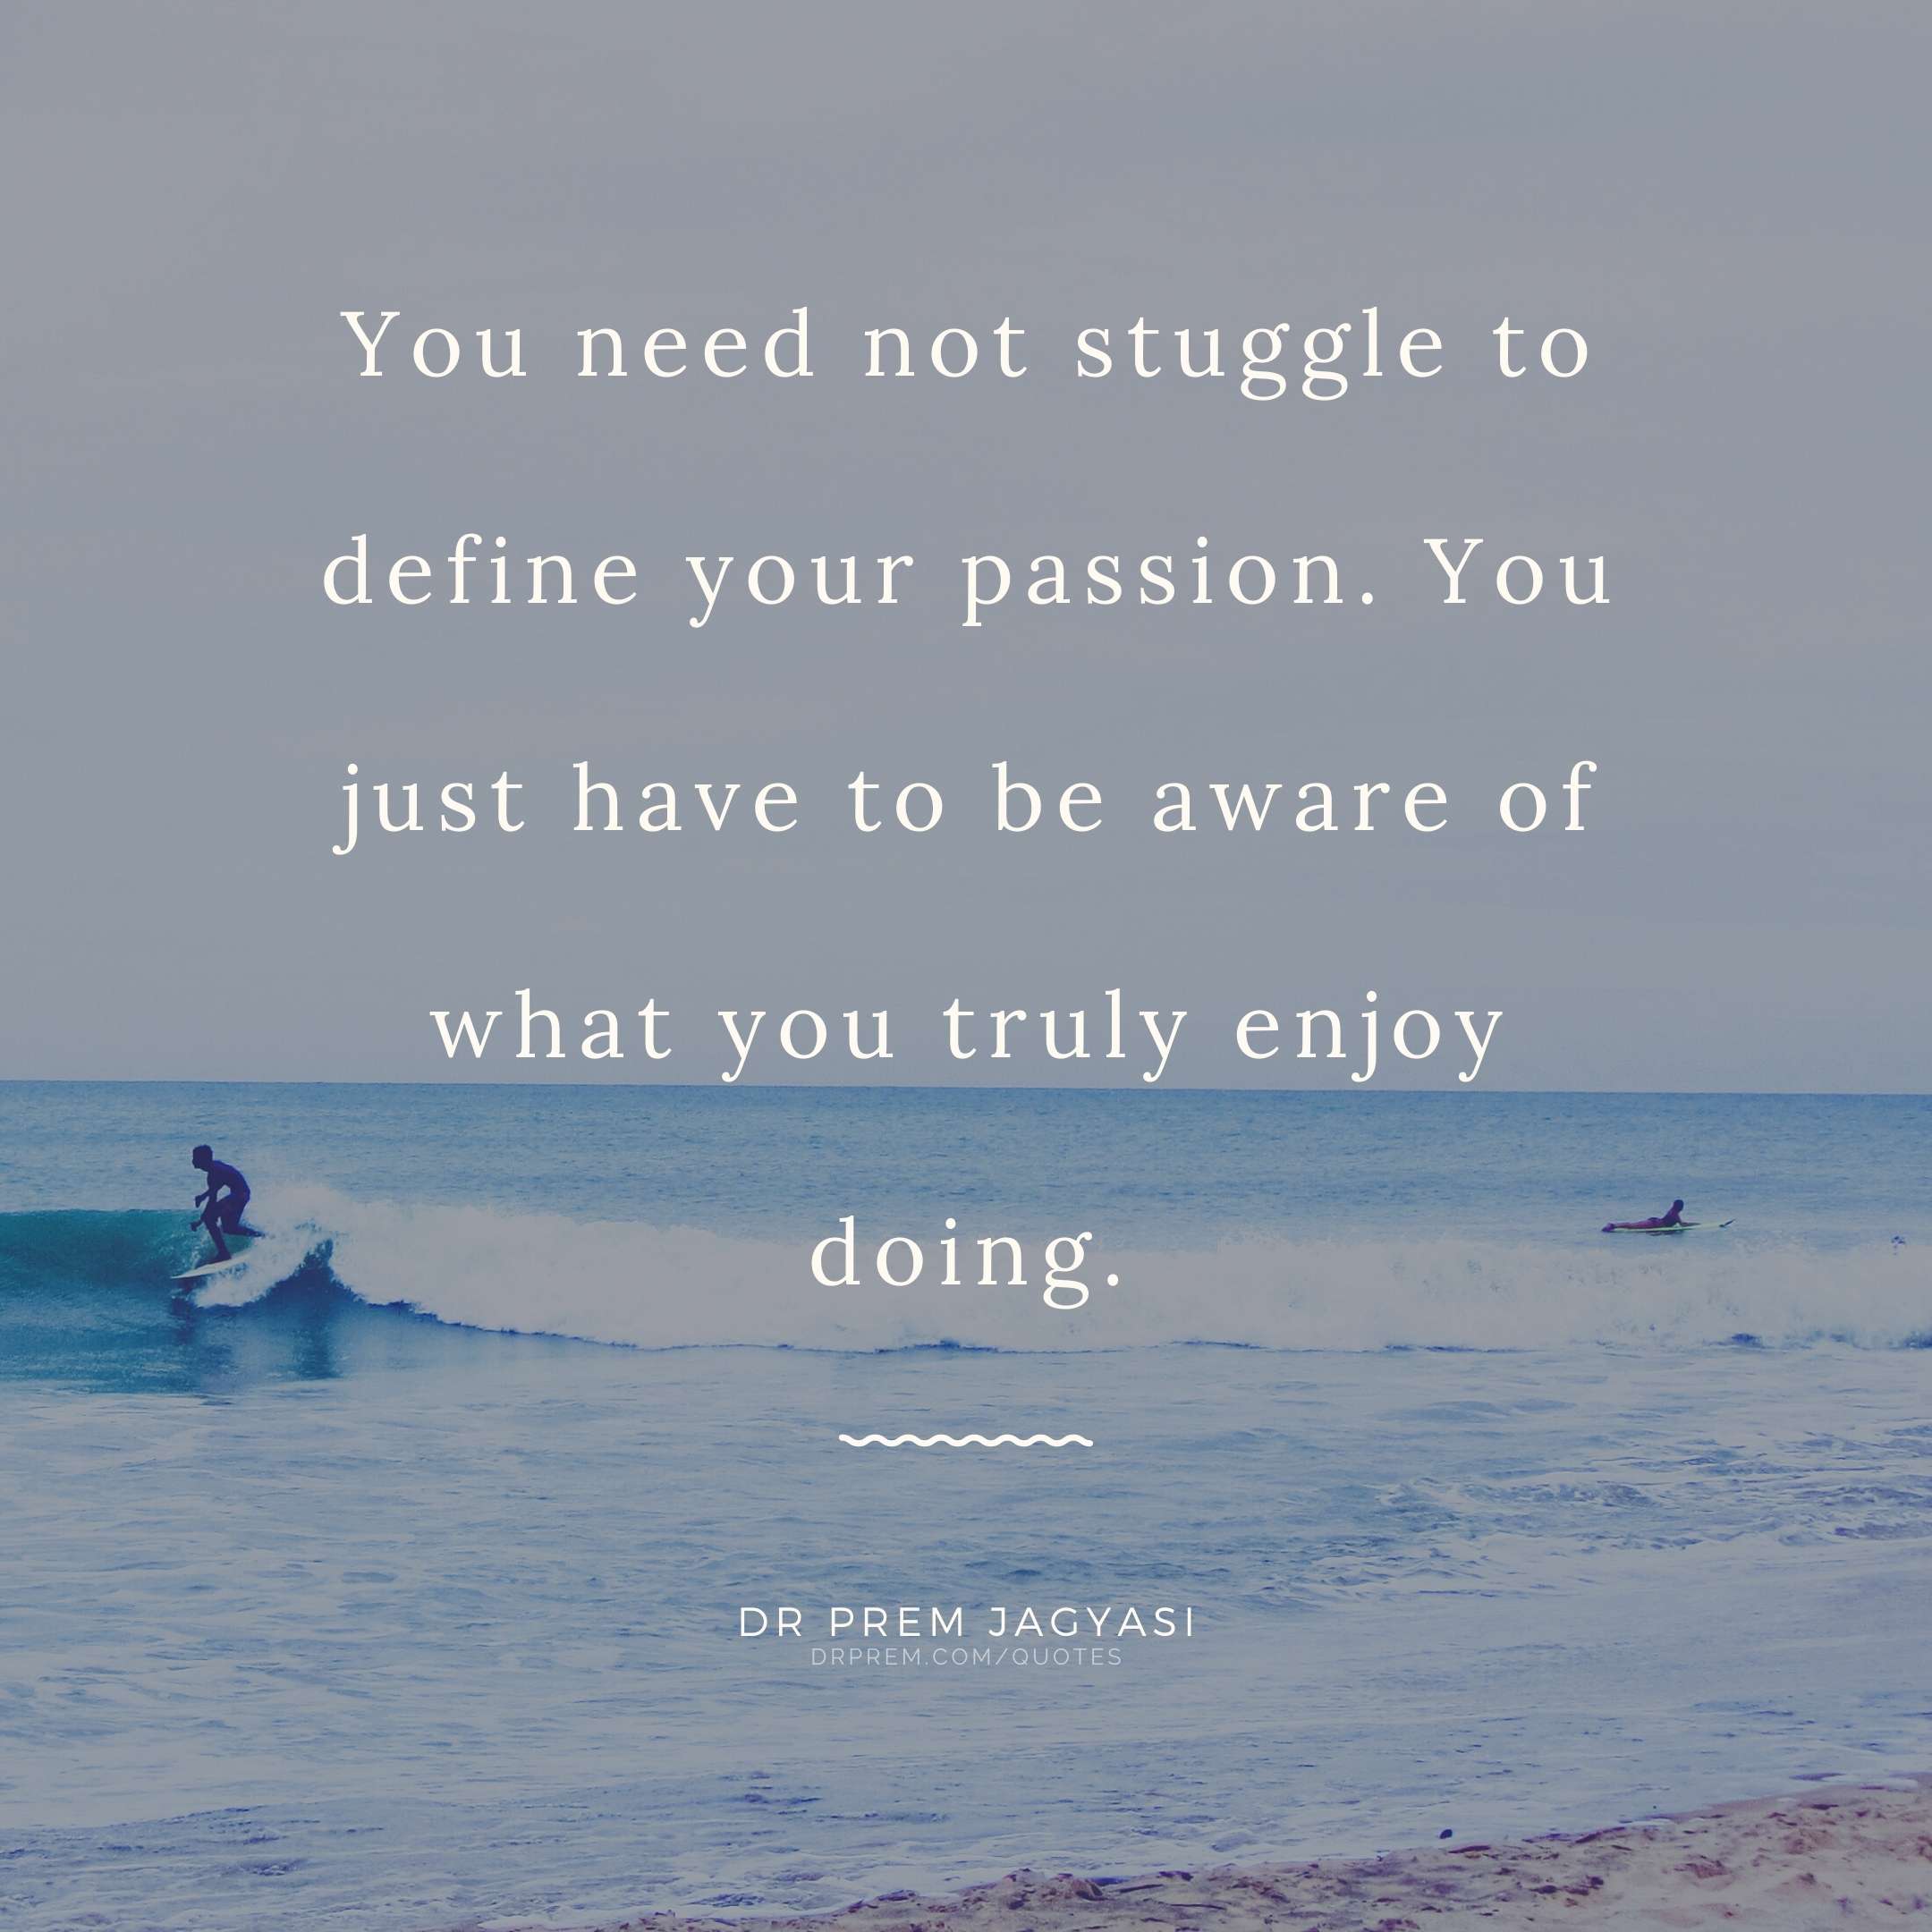 You need not struggle to define your passion- Dr Prem Jagyasi